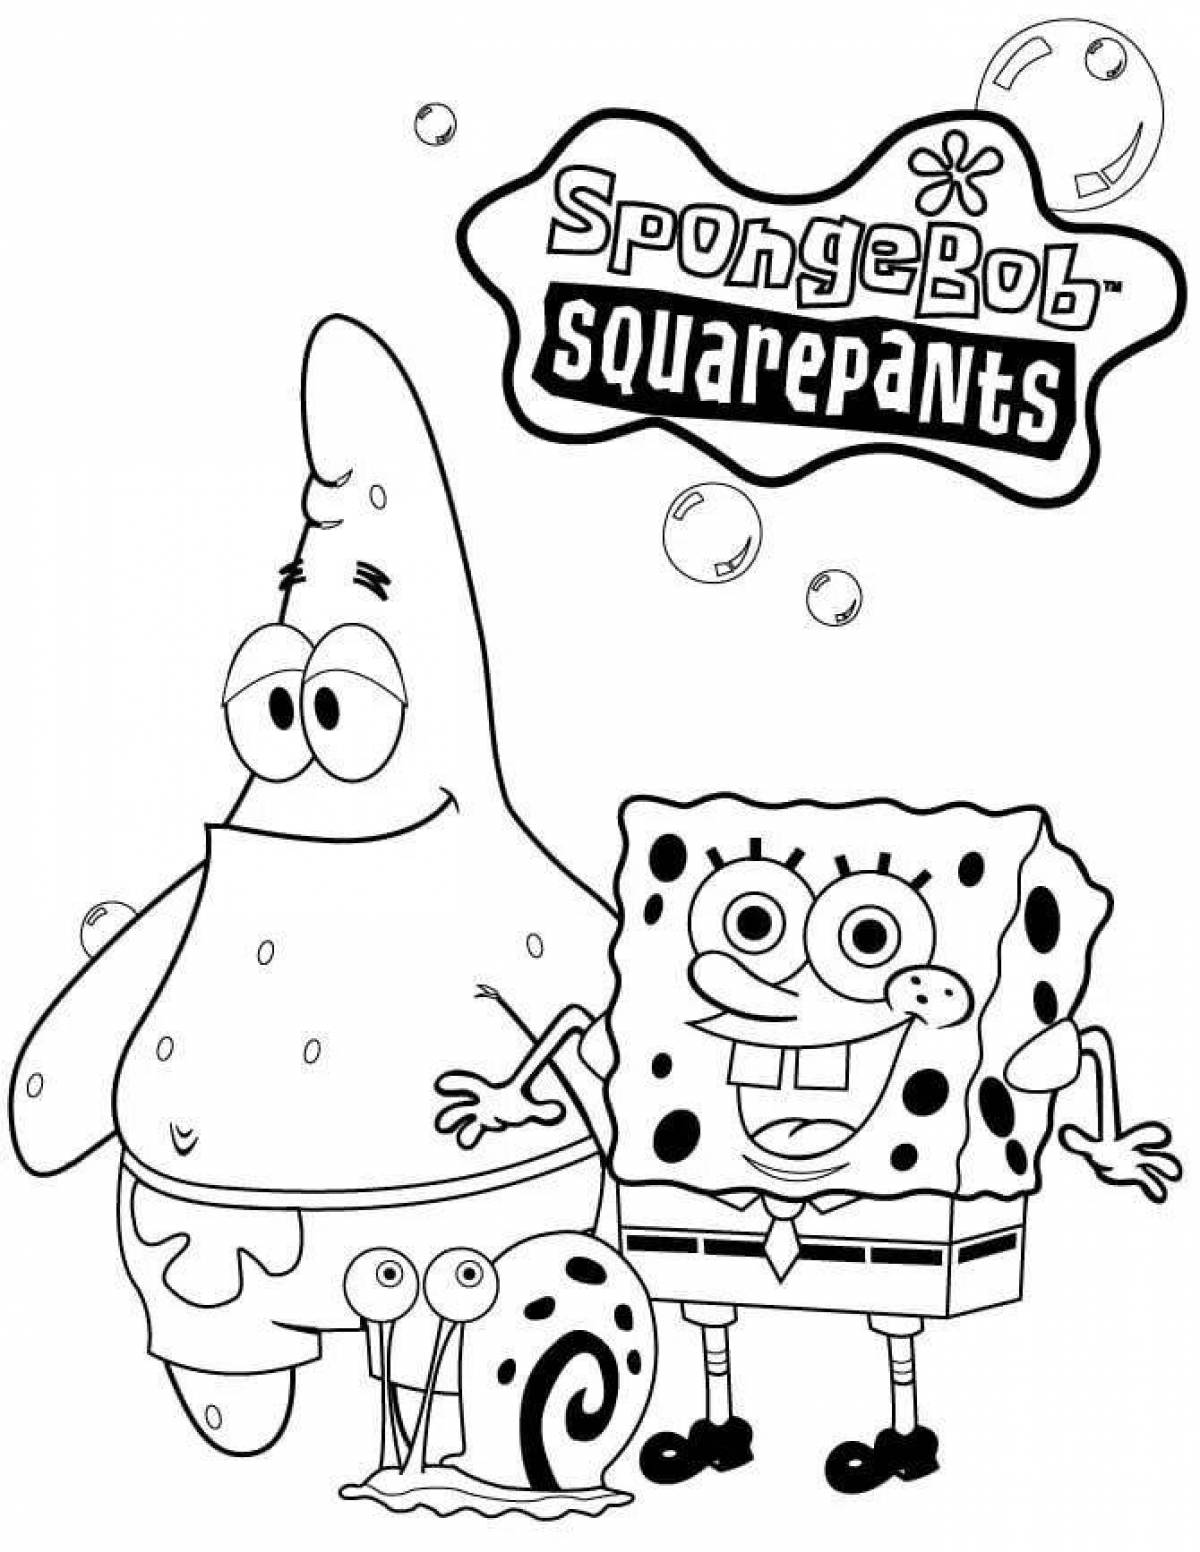 Spongebob and patrick #8